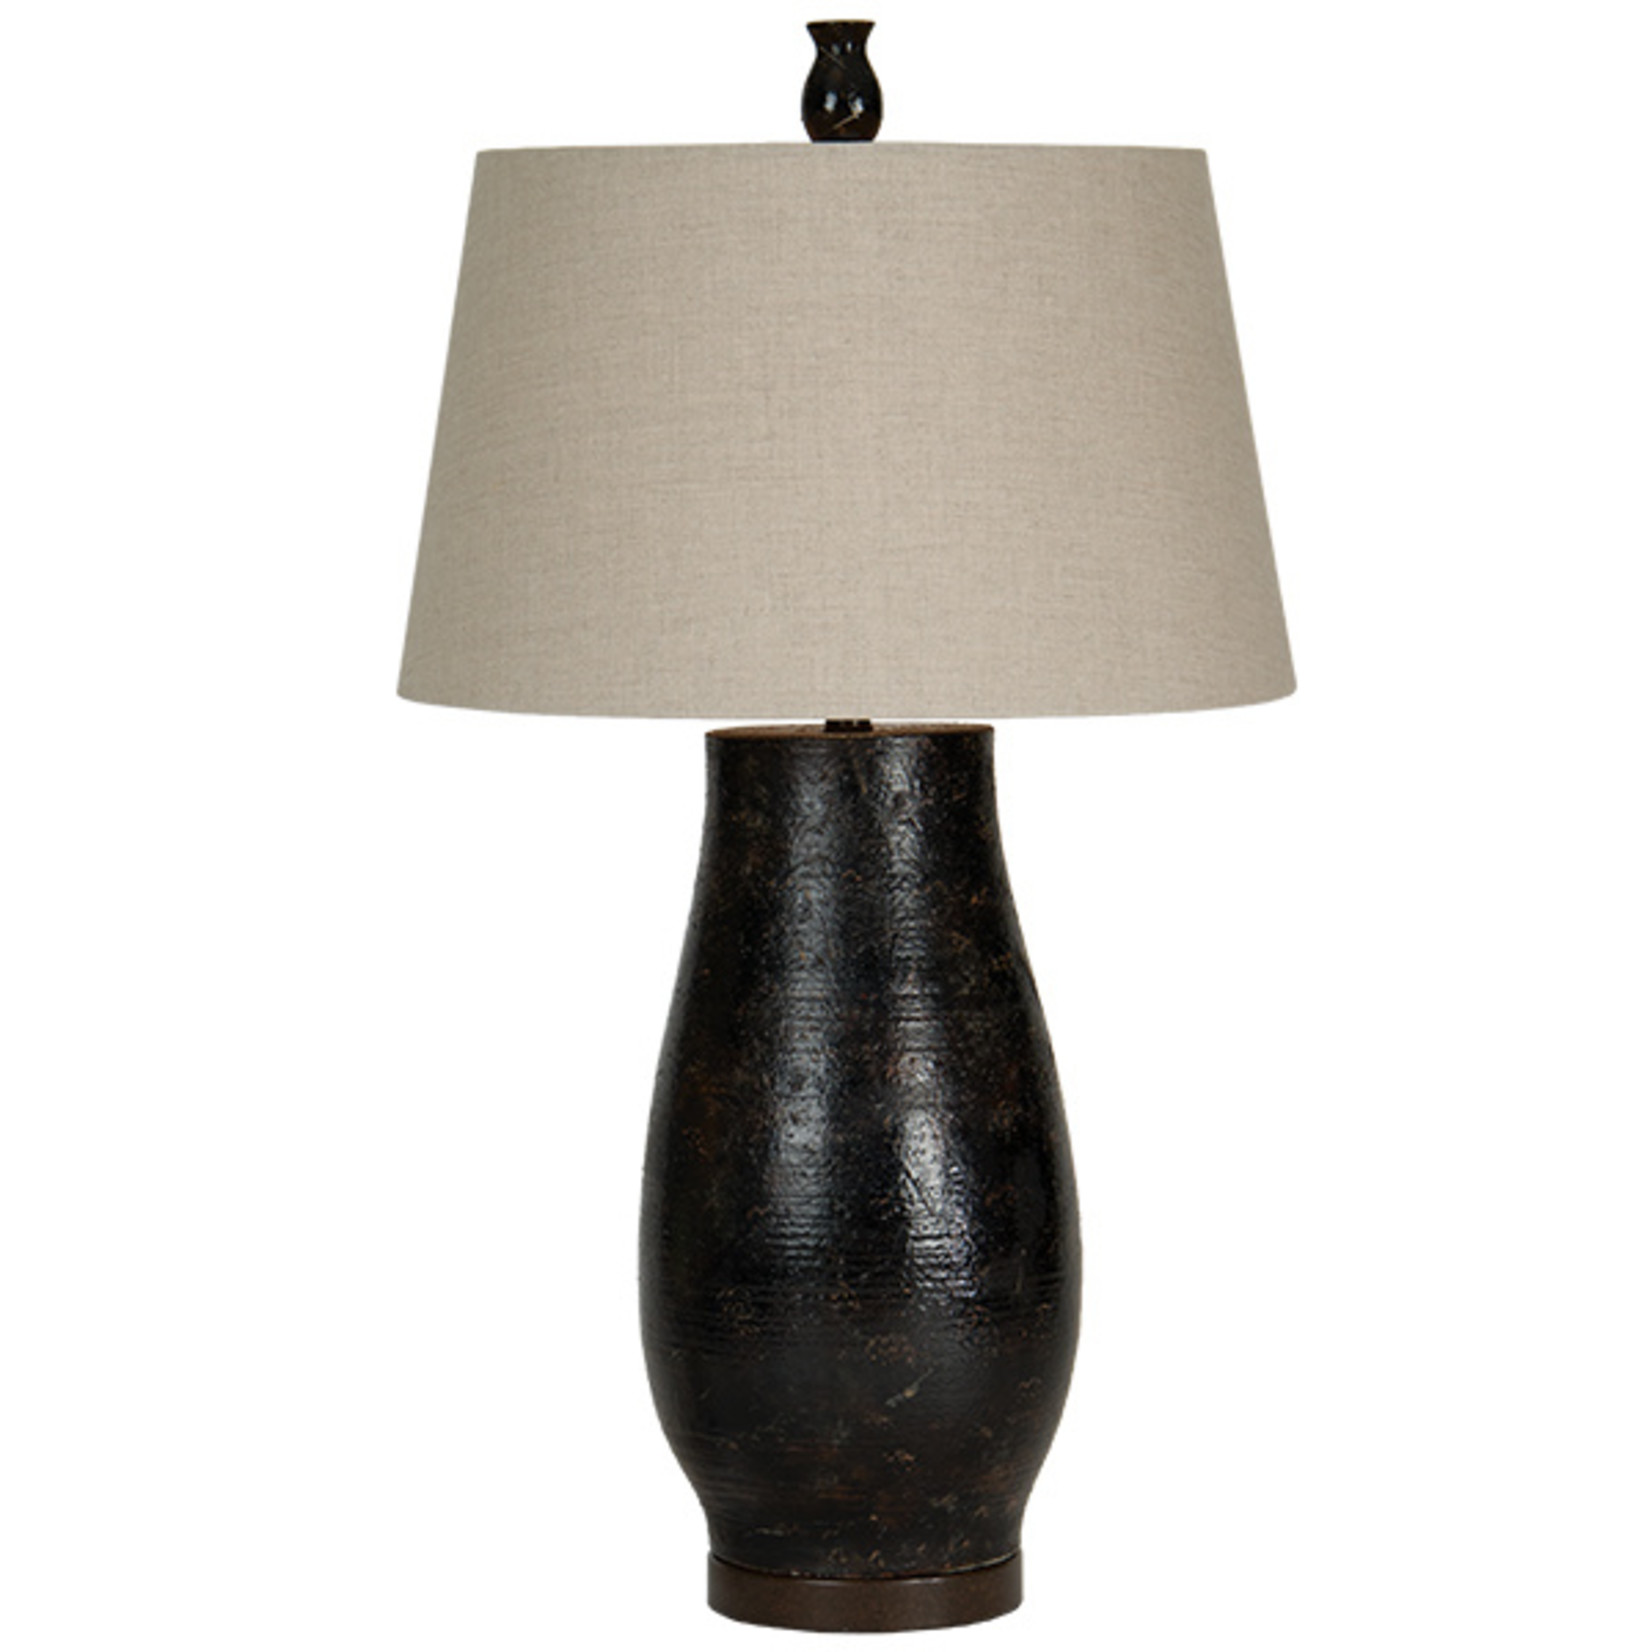 Caldo Table Lamp - NL